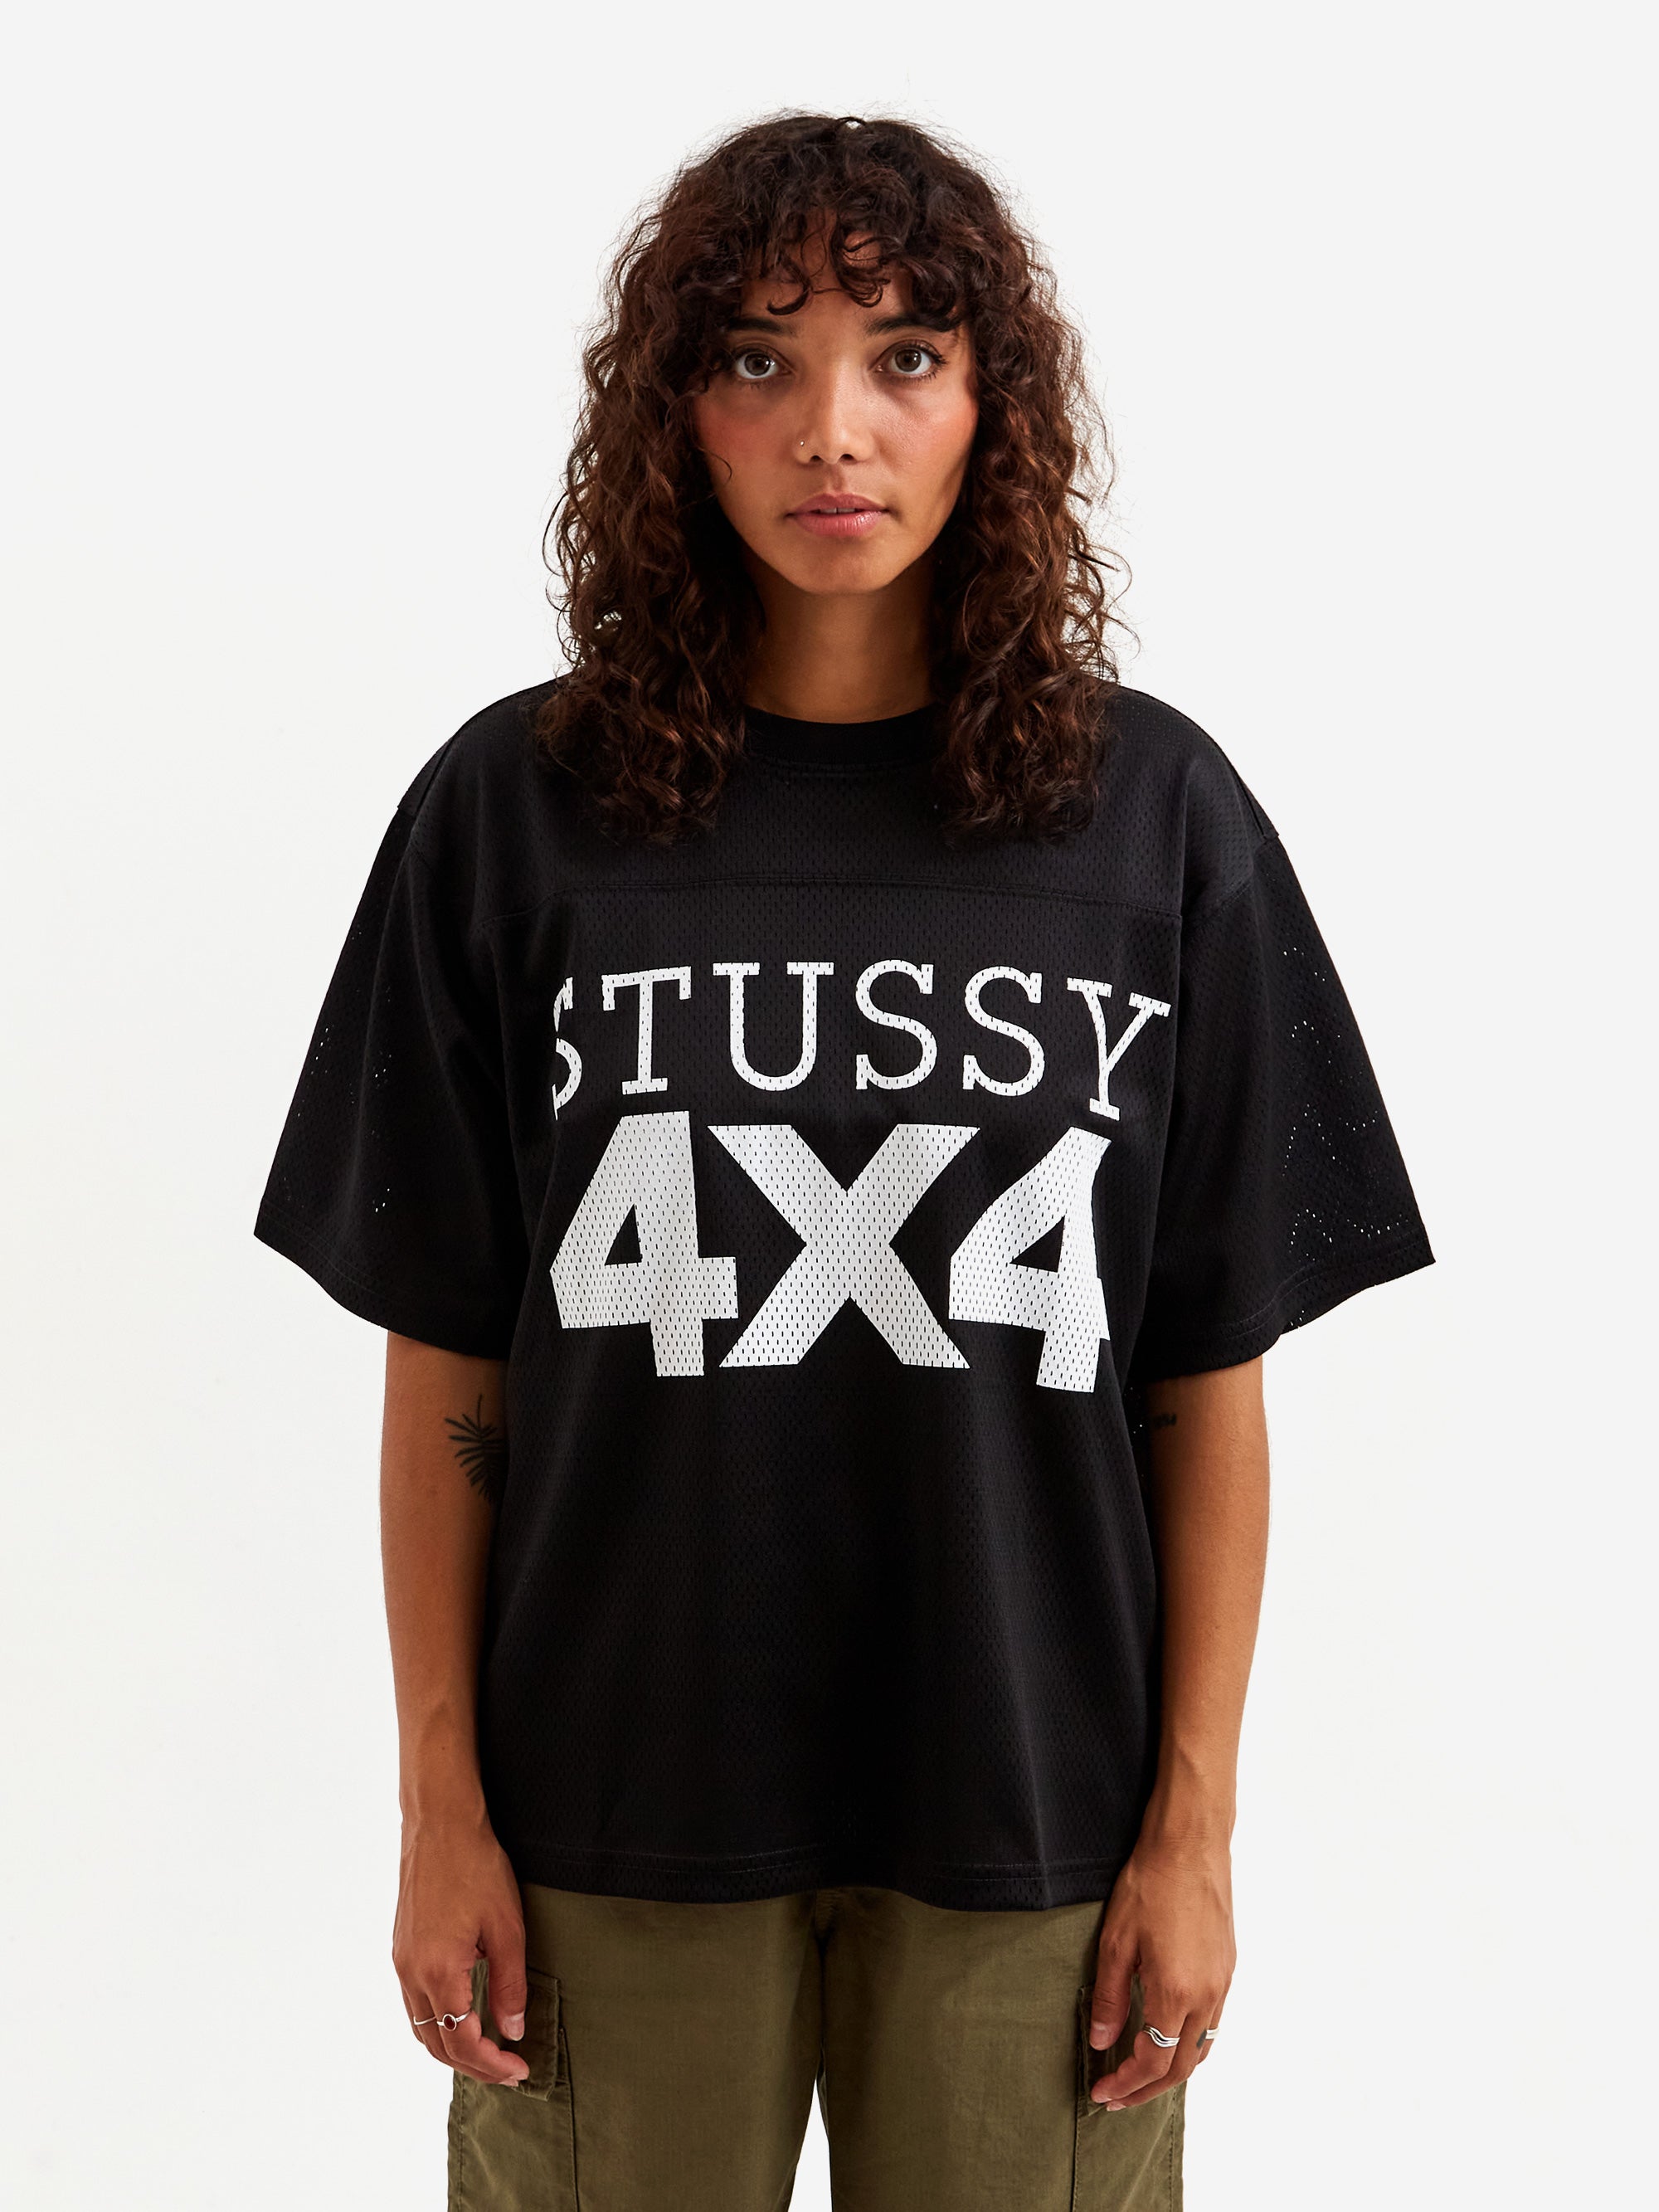 Stussy 4x4 Mesh Football Jersey W - Black